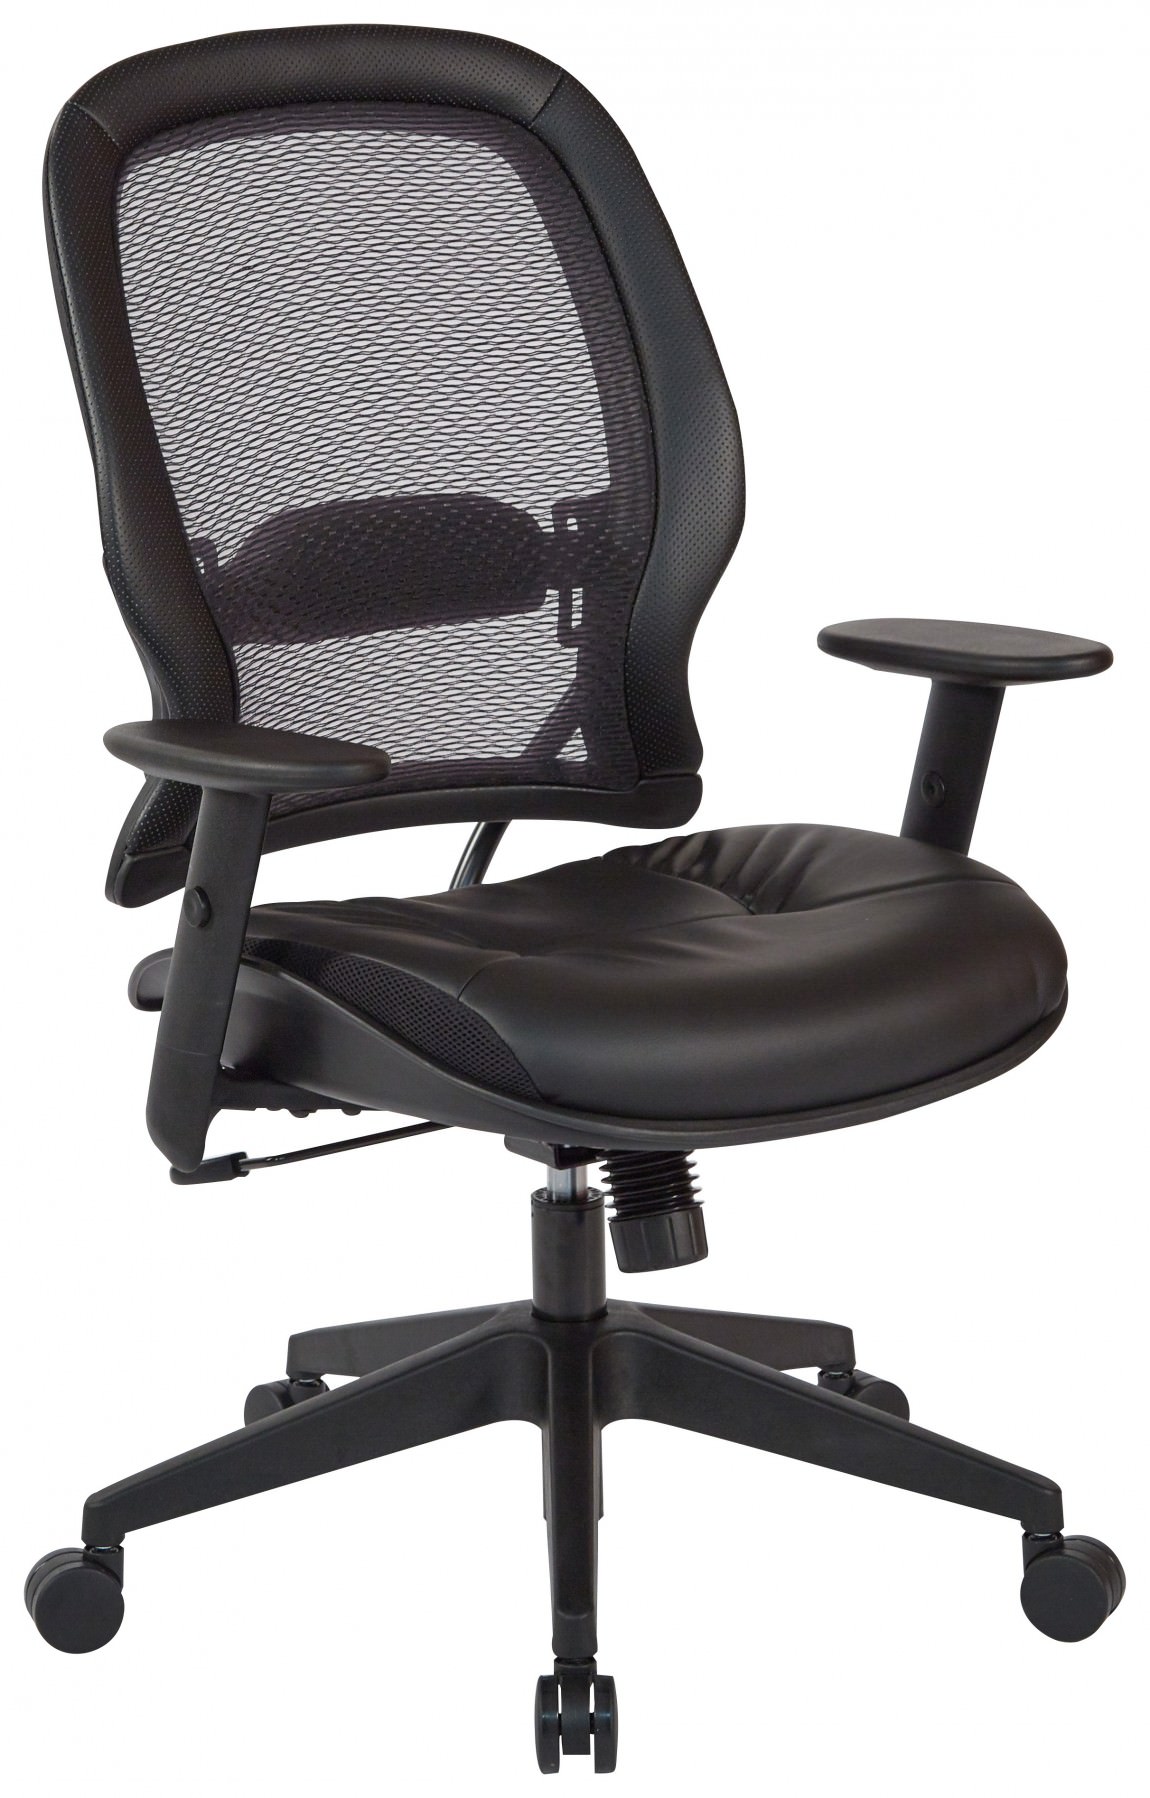 https://madisonliquidators.com/images/p/1150/25189-mesh-back-office-chair-1.jpg